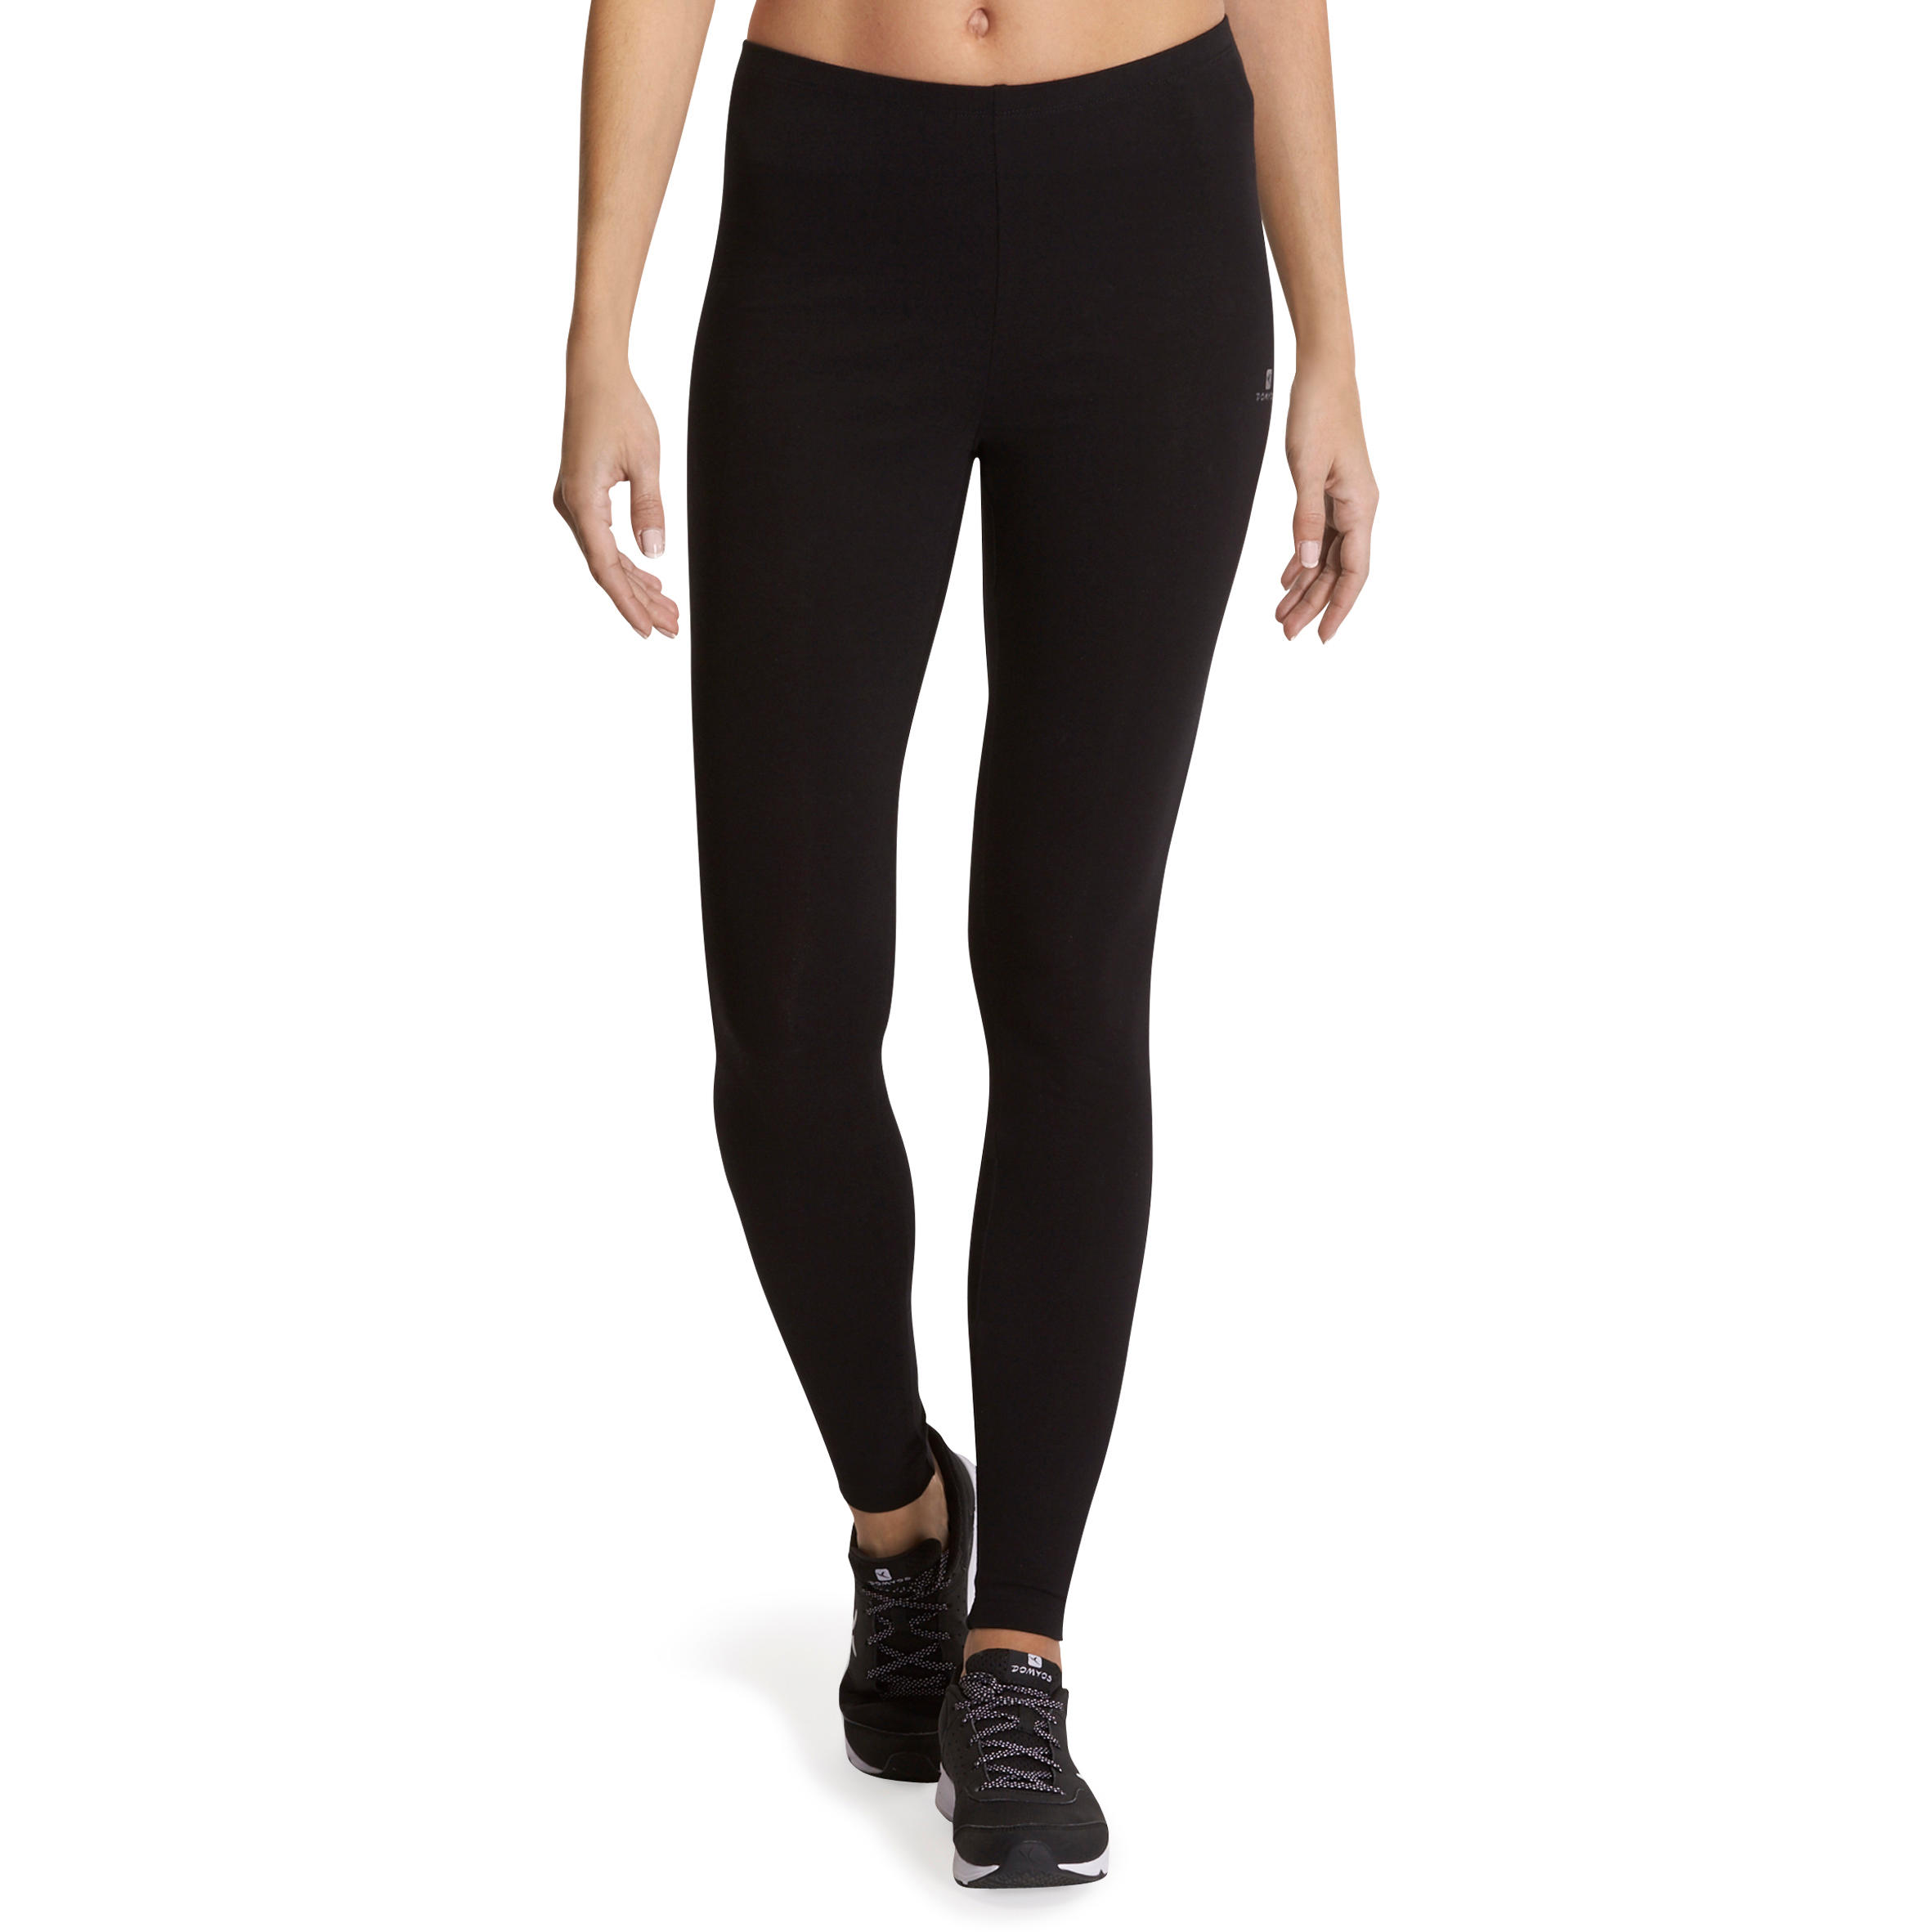 100 Salto Women's Slim-Fit Stretching Leggings - Black 2/9